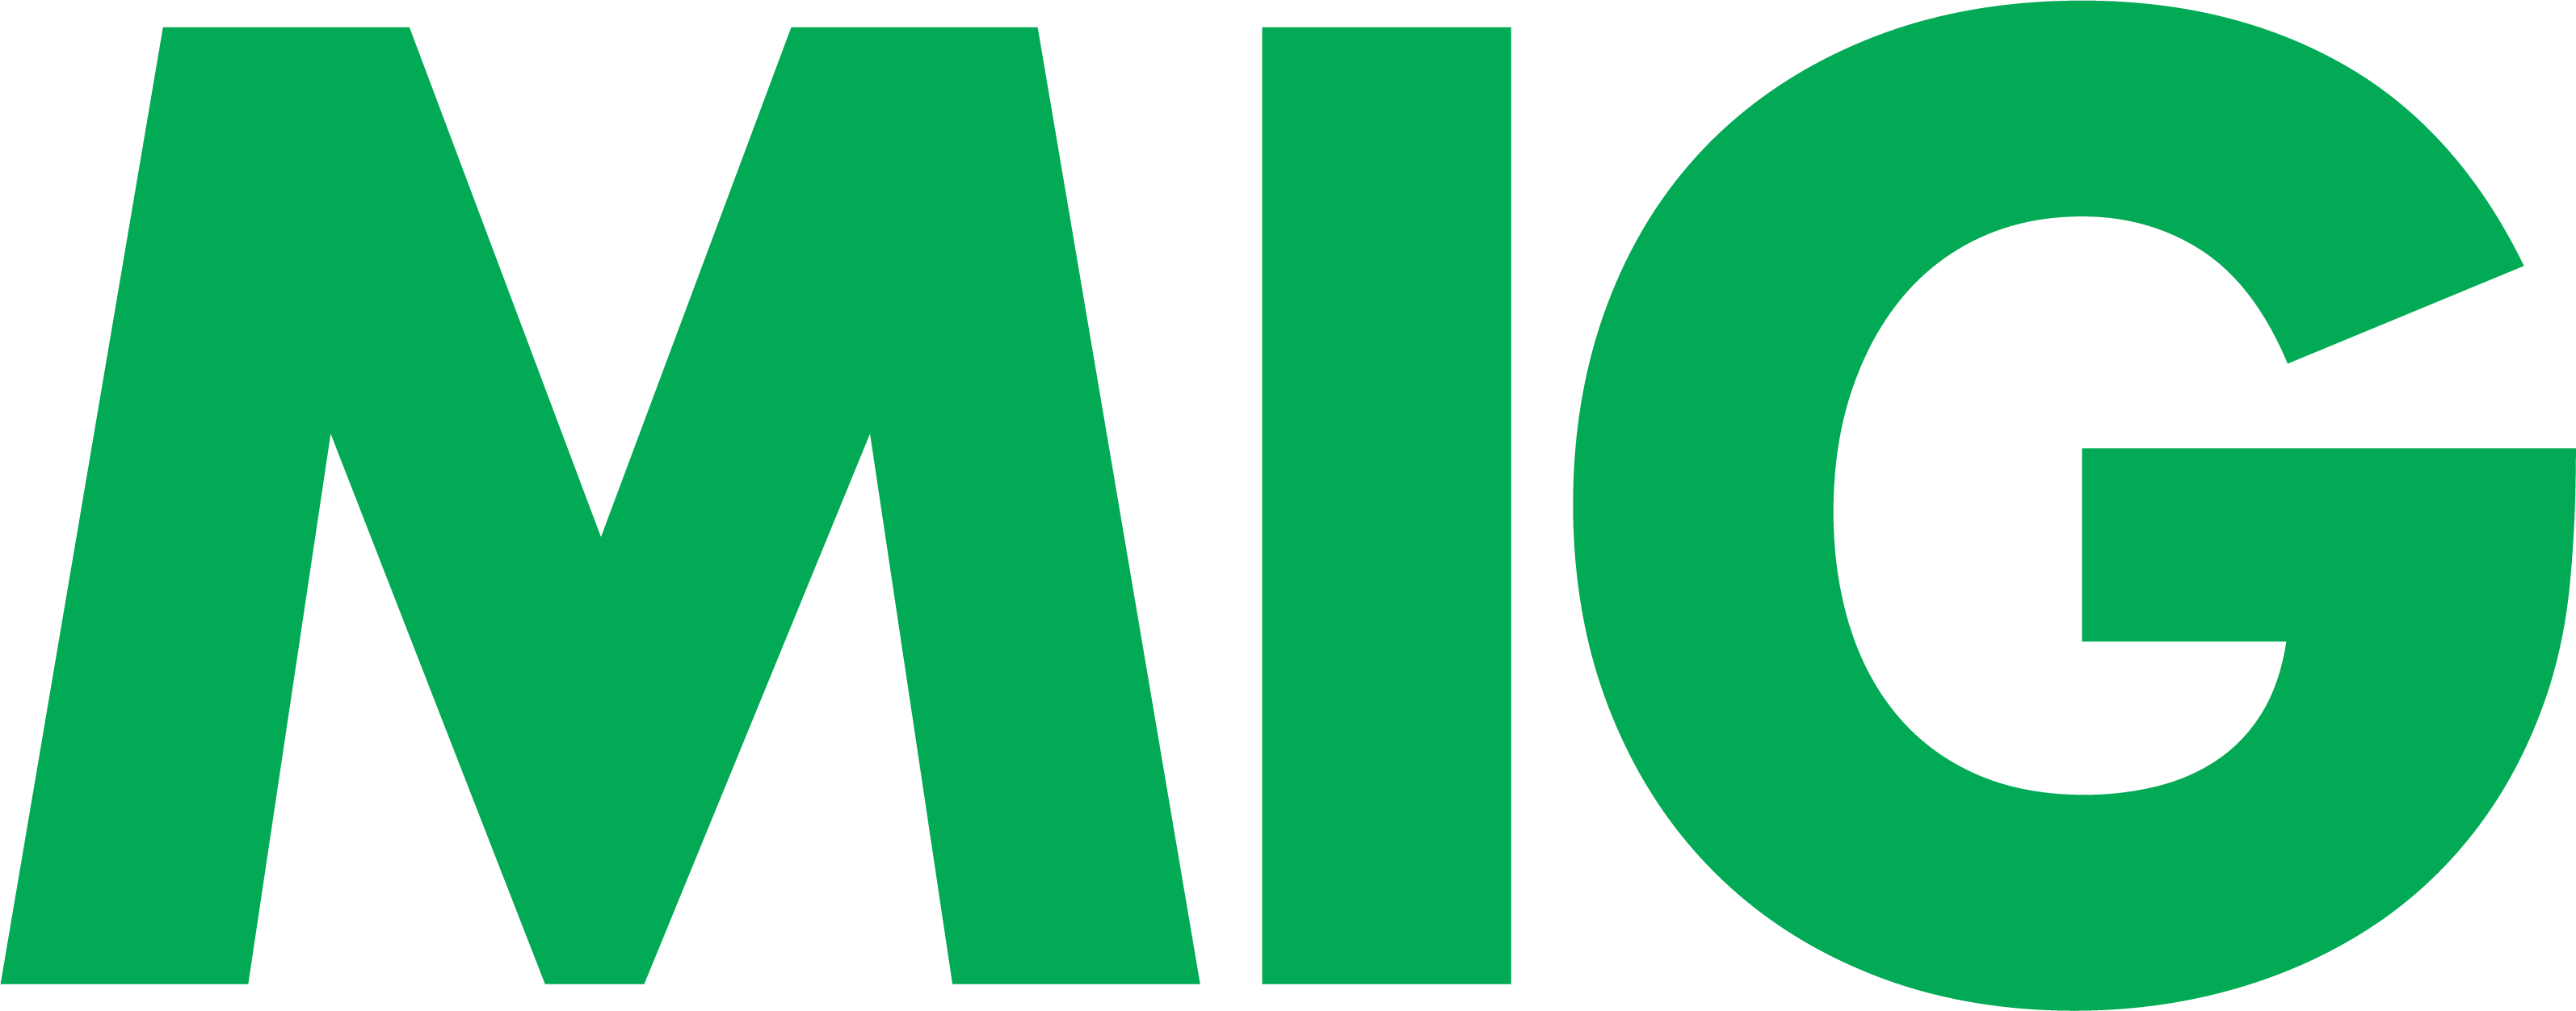 Mortgage Investors Group Company Logo